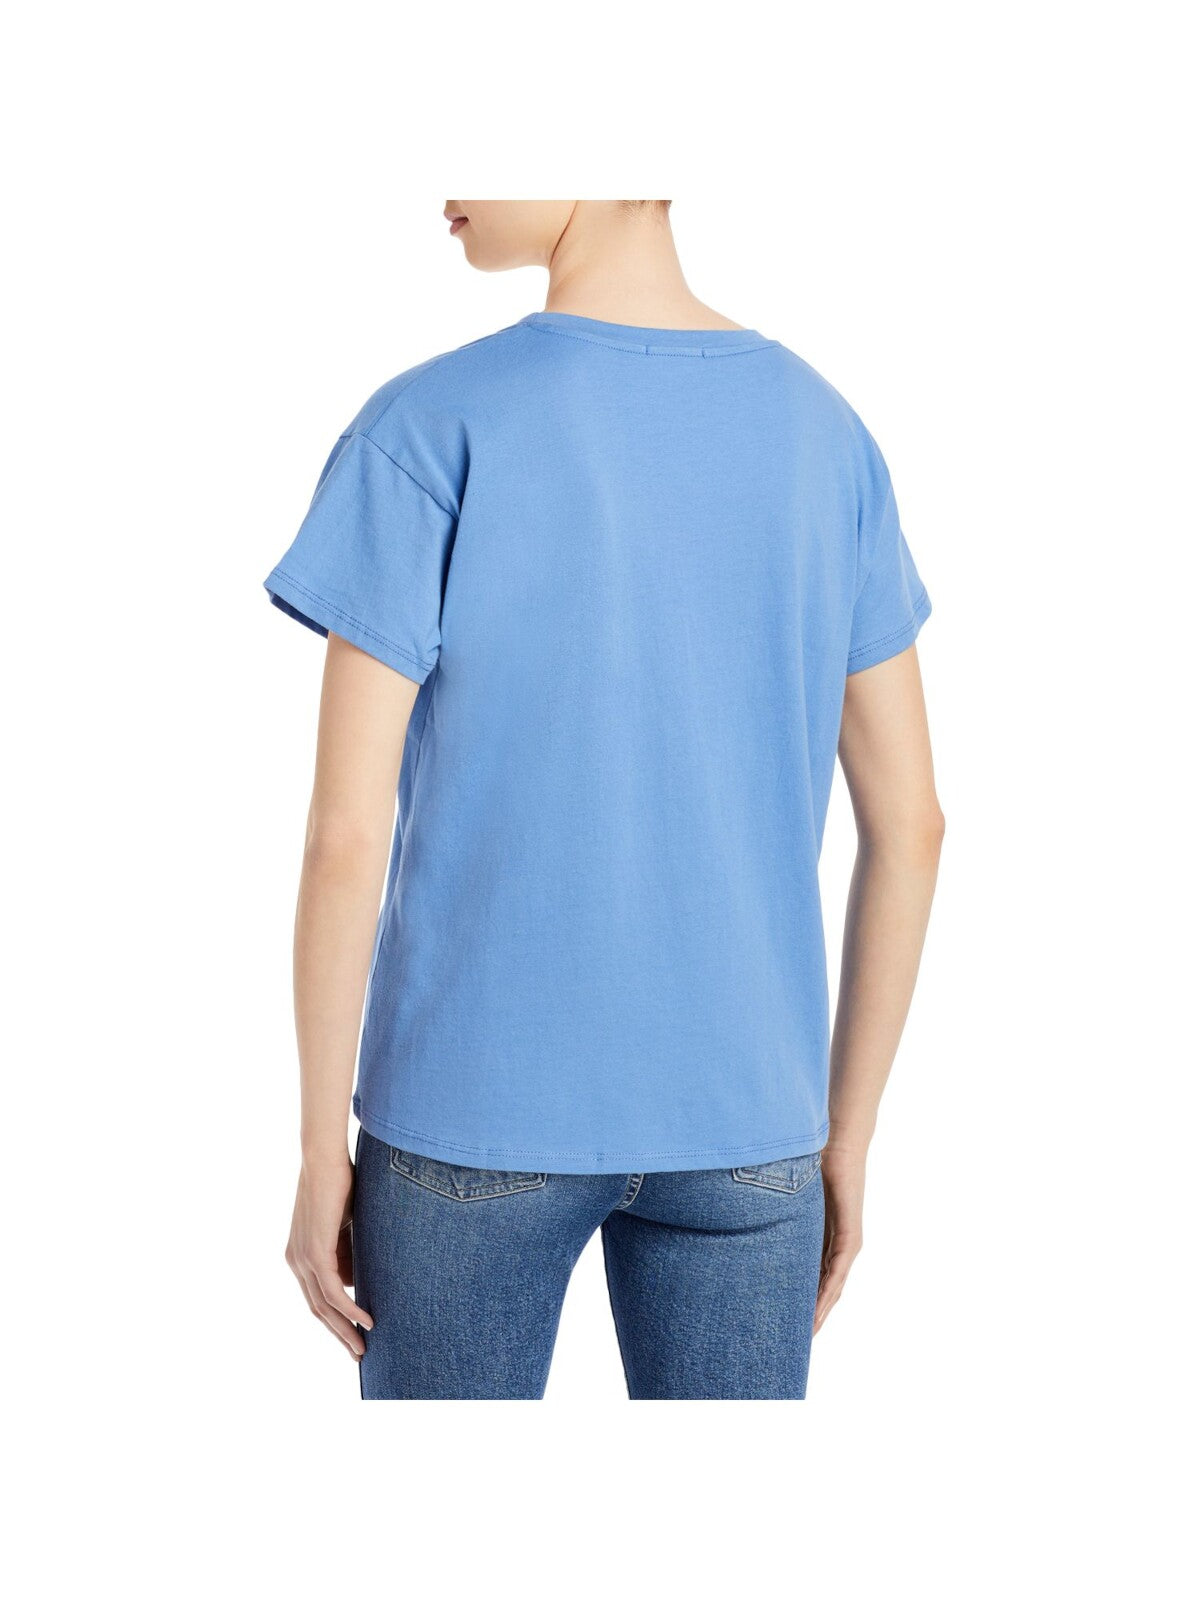 KNIT RIOT Womens Blue Graphic Short Sleeve Crew Neck T-Shirt L